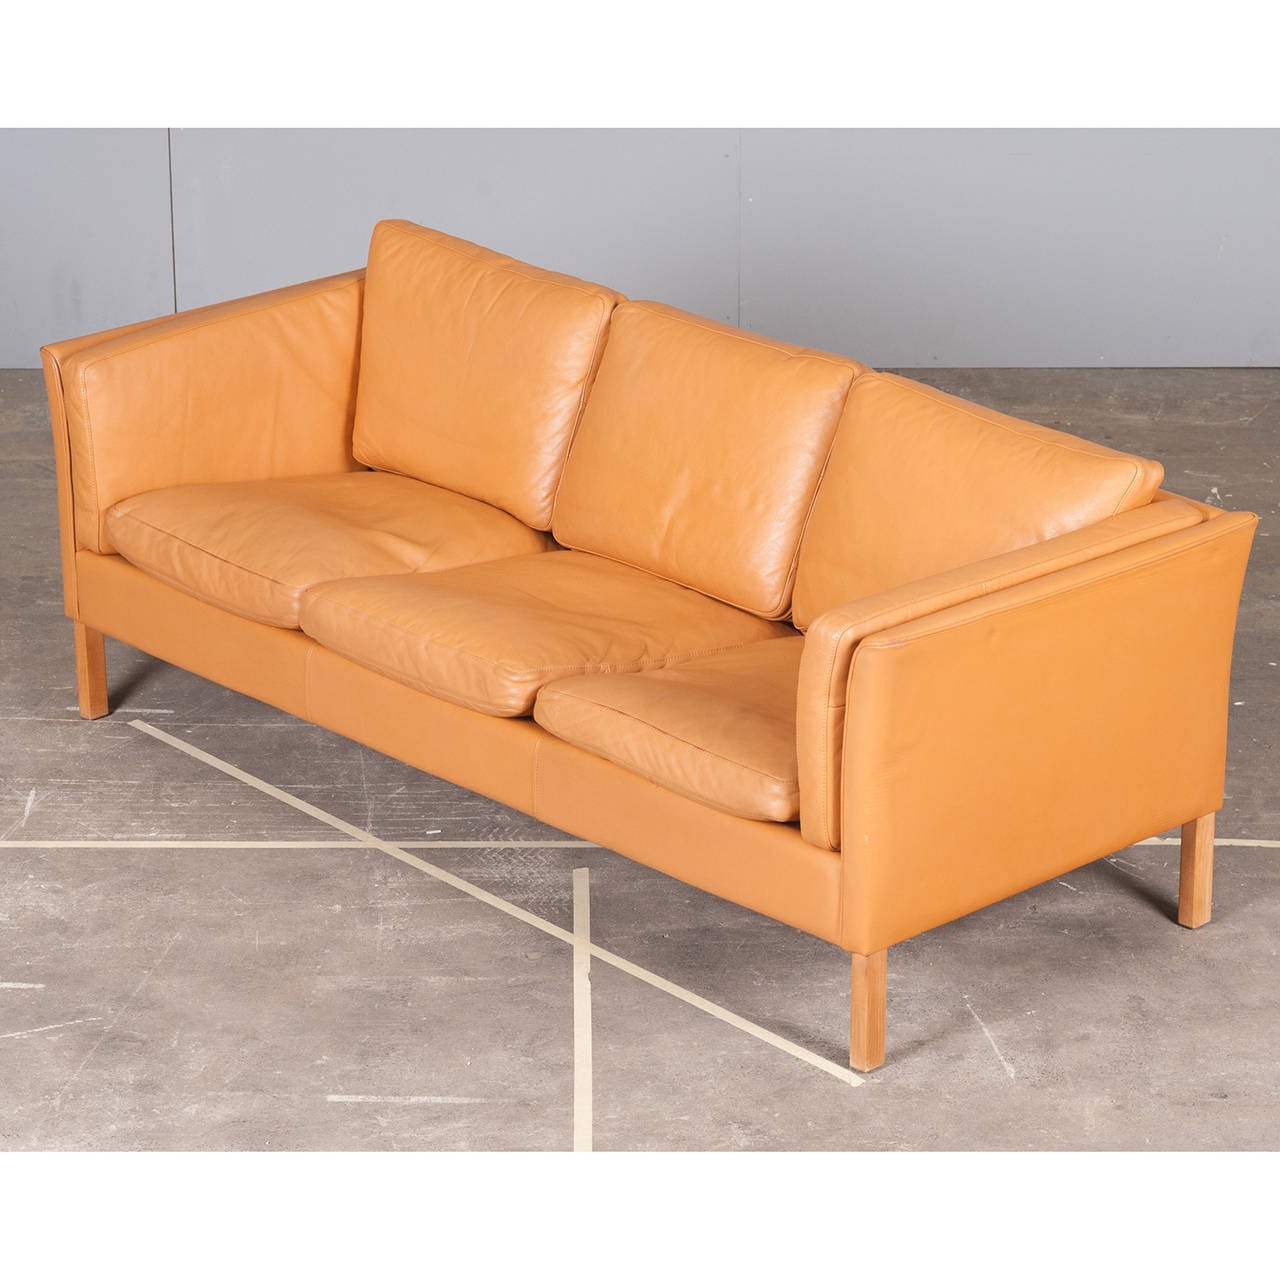 Mid-Century Modern Danish Three-Seater Sofa in Honey Tan Leather, 1960s For Sale